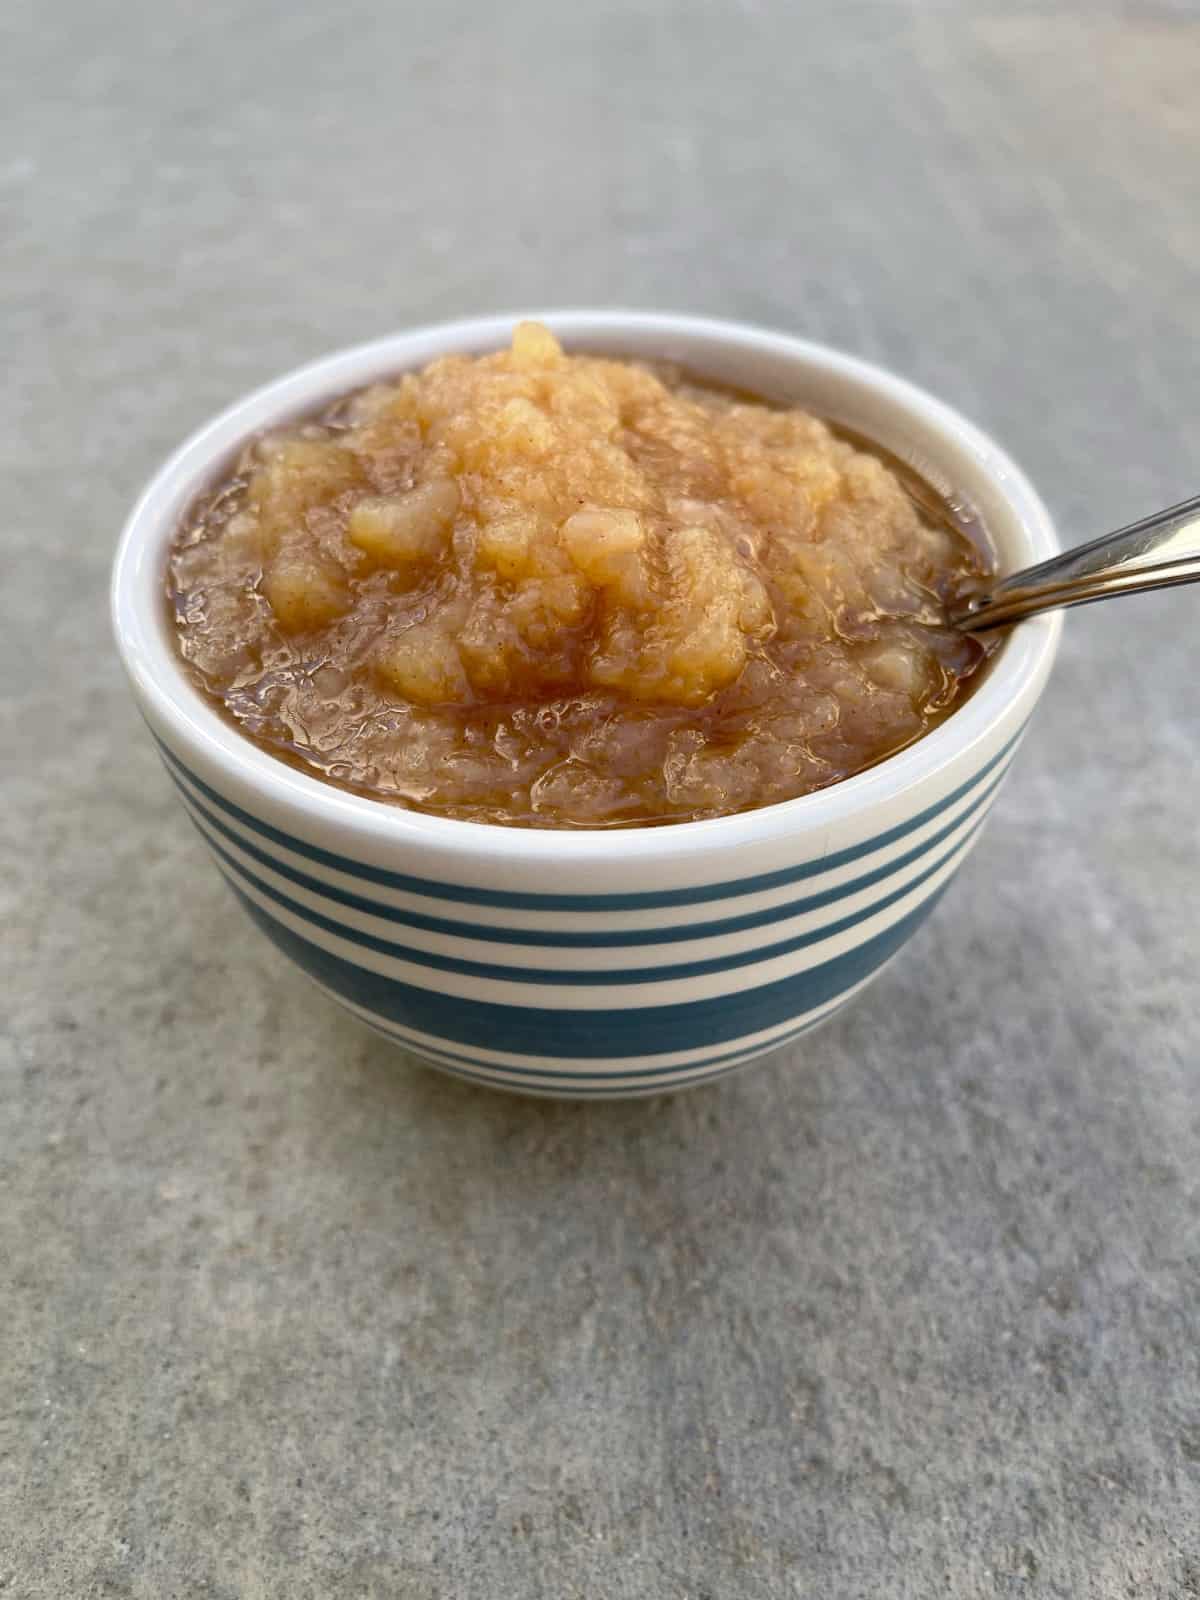 Instant Pot σάλτσα μήλου κανέλας σε μικρό μπολ με κουτάλι.